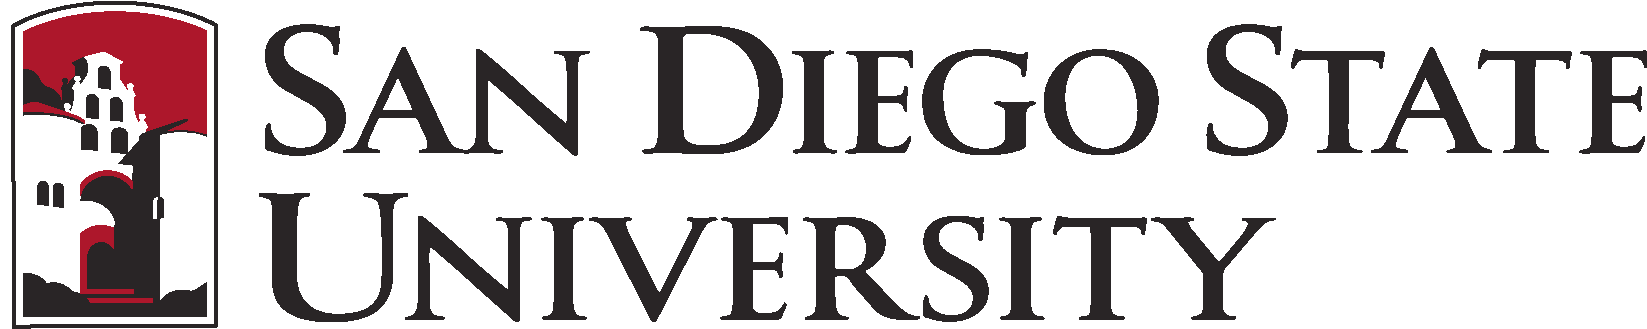 SDSU Logo-Seal [San Diego State University]